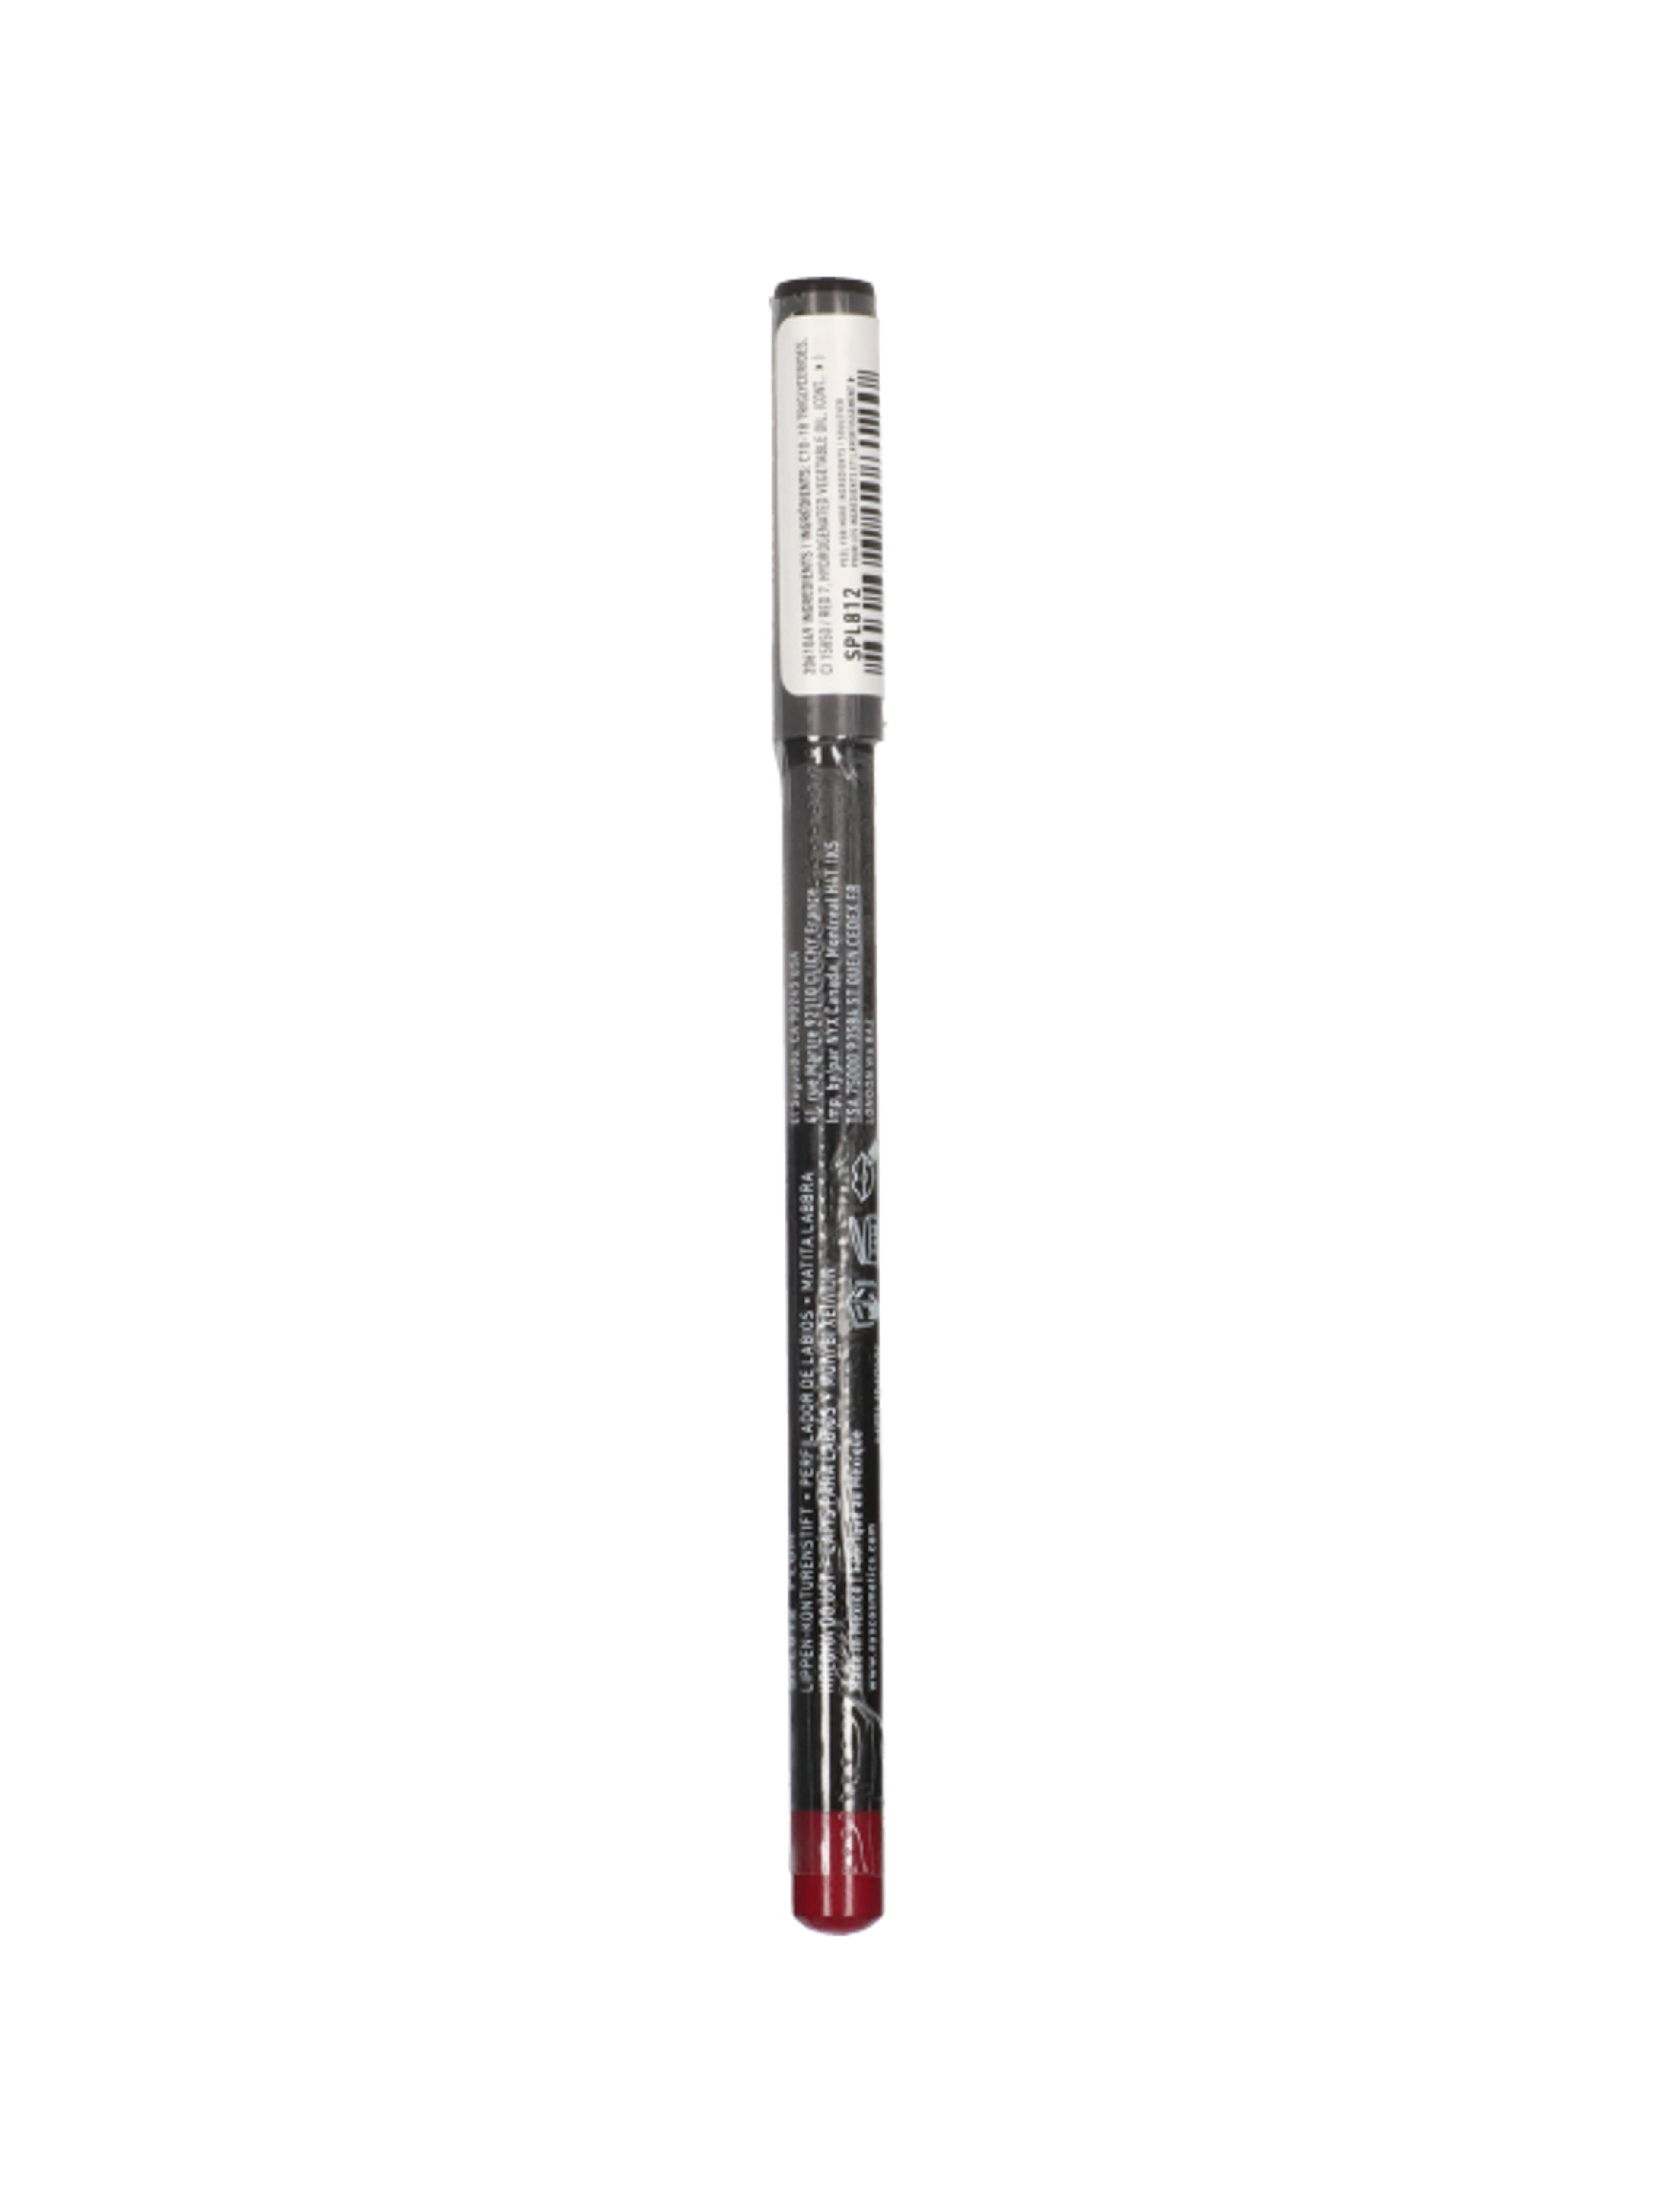 NYX Professional Makeup Slim Lip Pencil ajakkontúr ceruza, Plum - 1 db-6